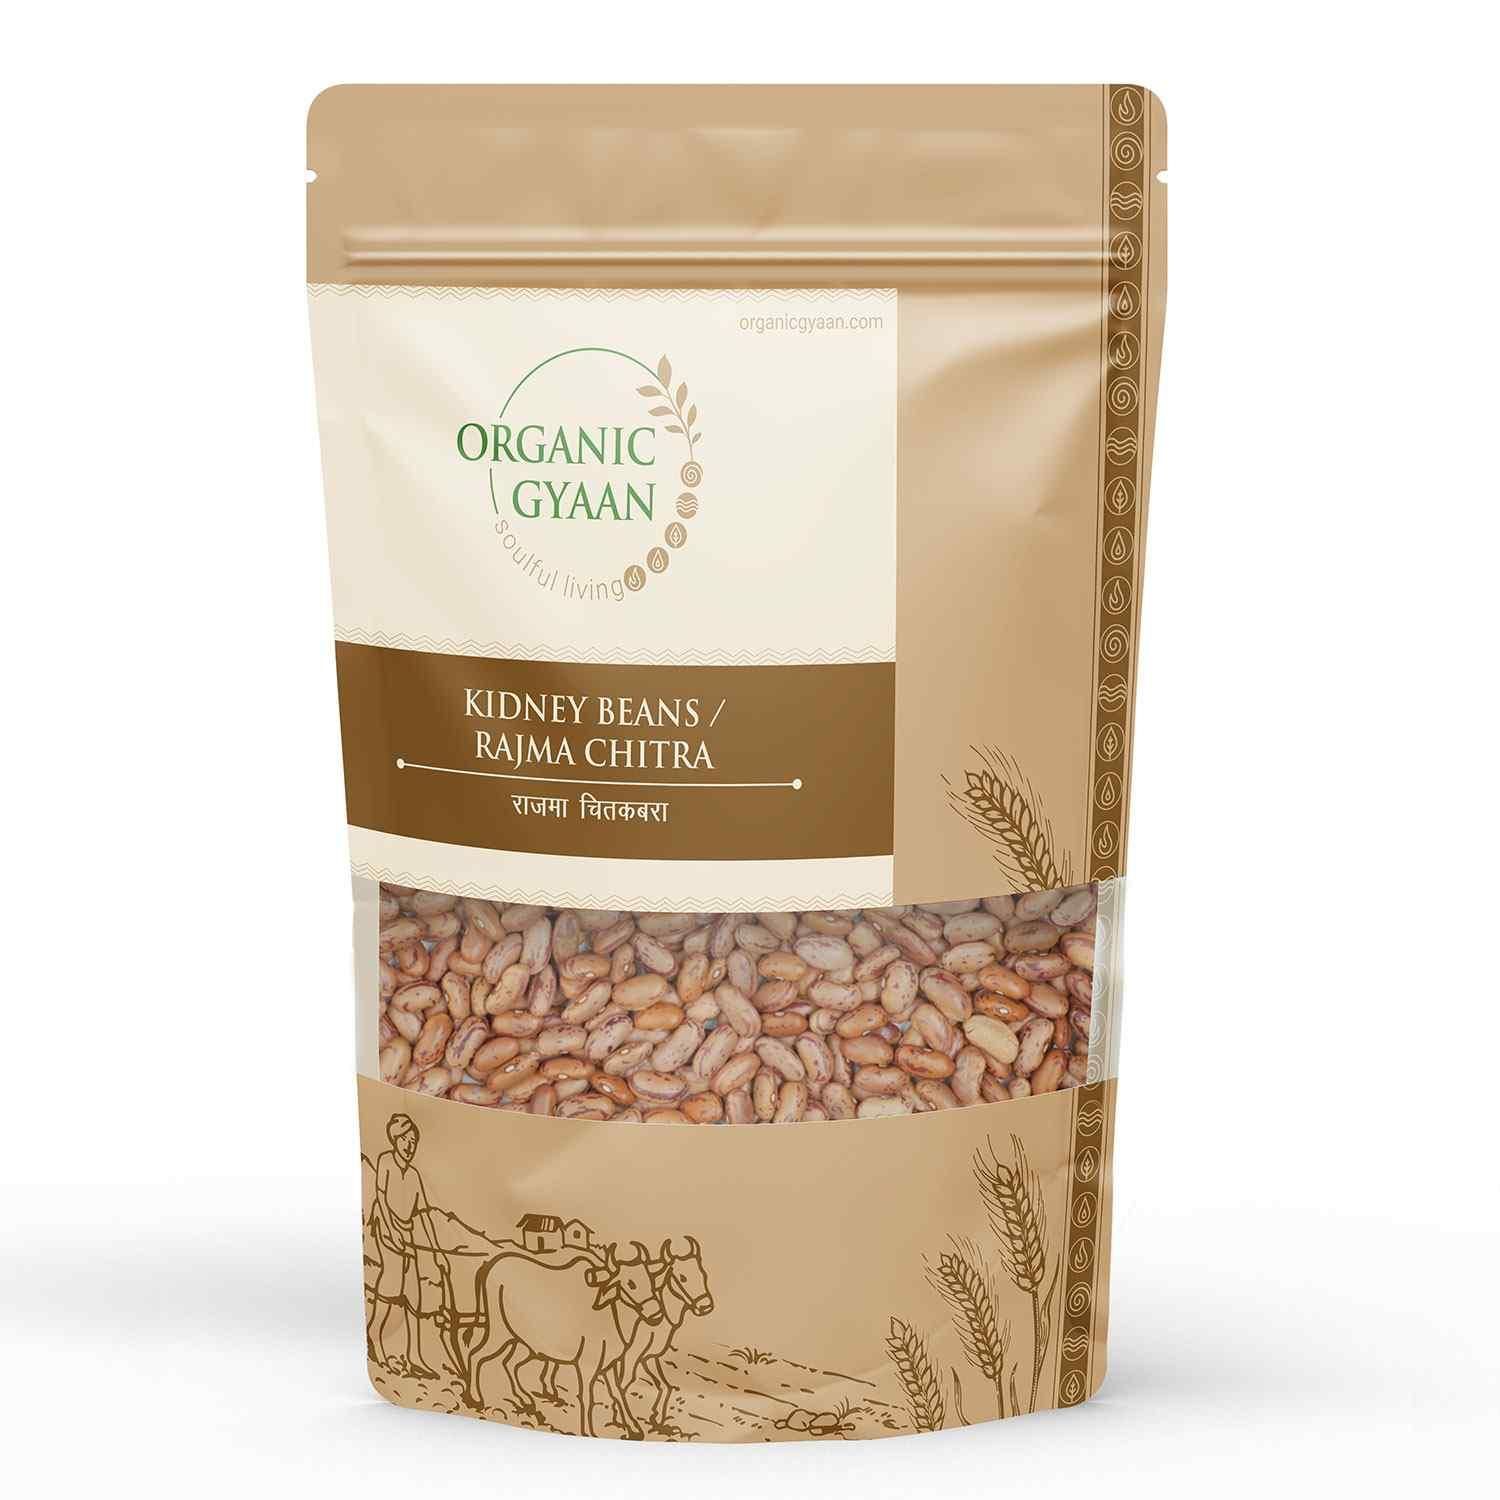 Organic Gyaan Organic Kidney Beans / Rajma Chitra 450gm